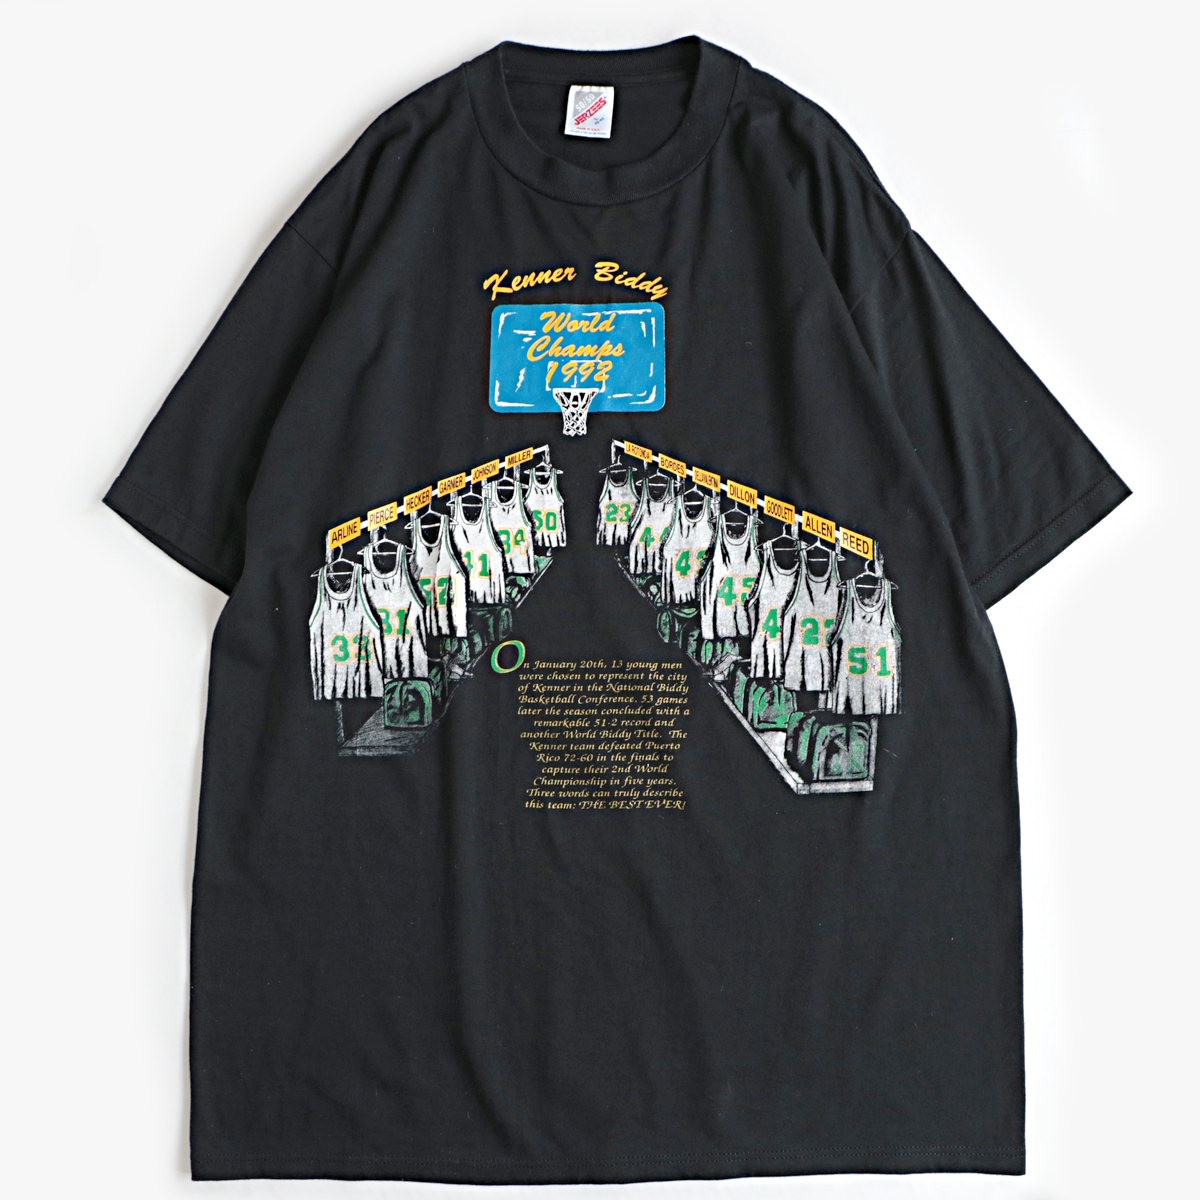 90s jerzees バスケ チーム ユニフォーム プリント 半袖 Tシャツ